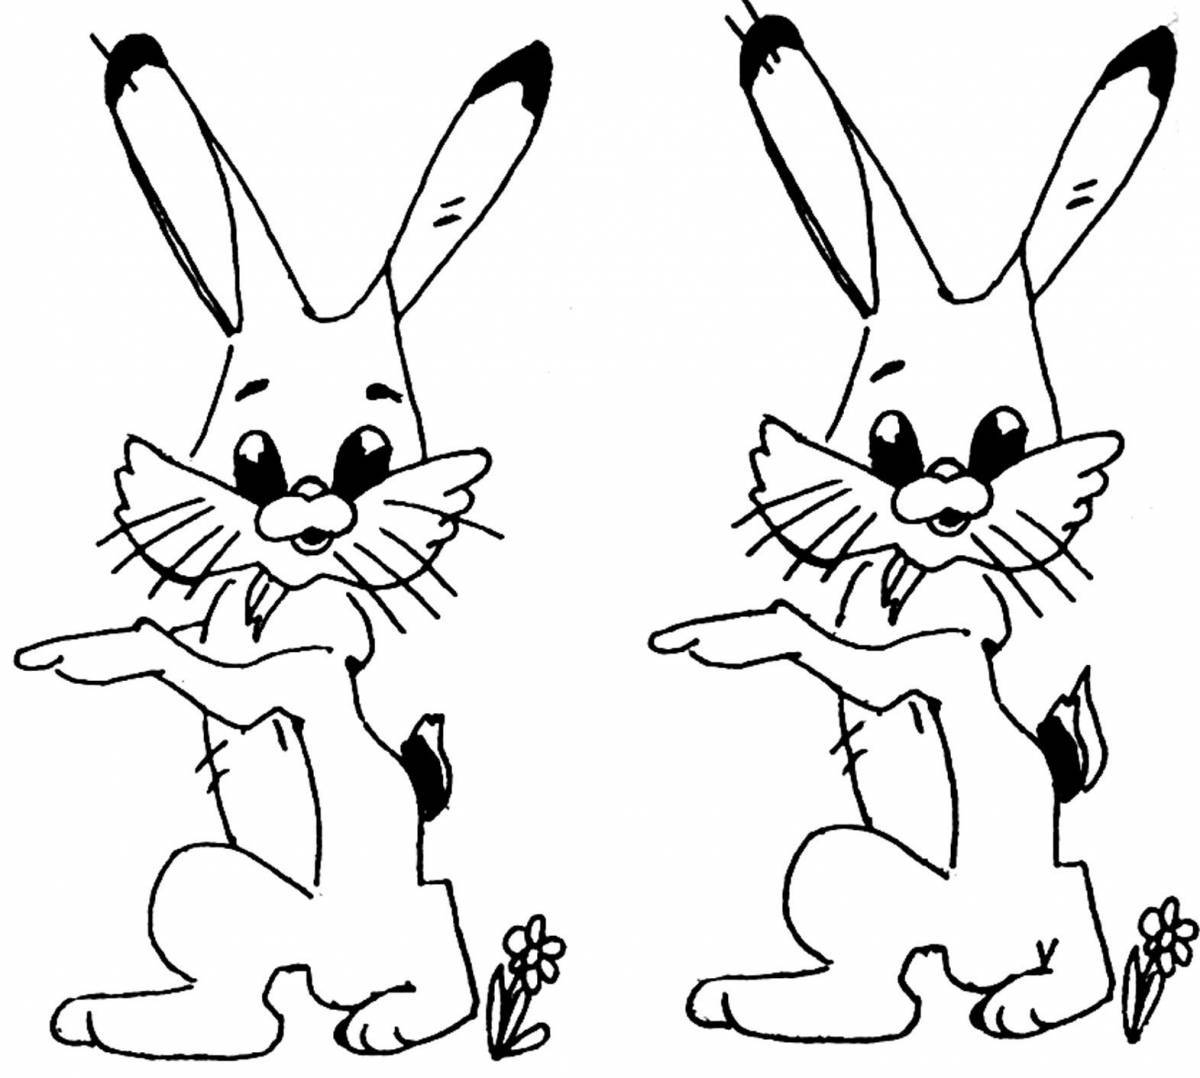 Magic rabbit coloring book